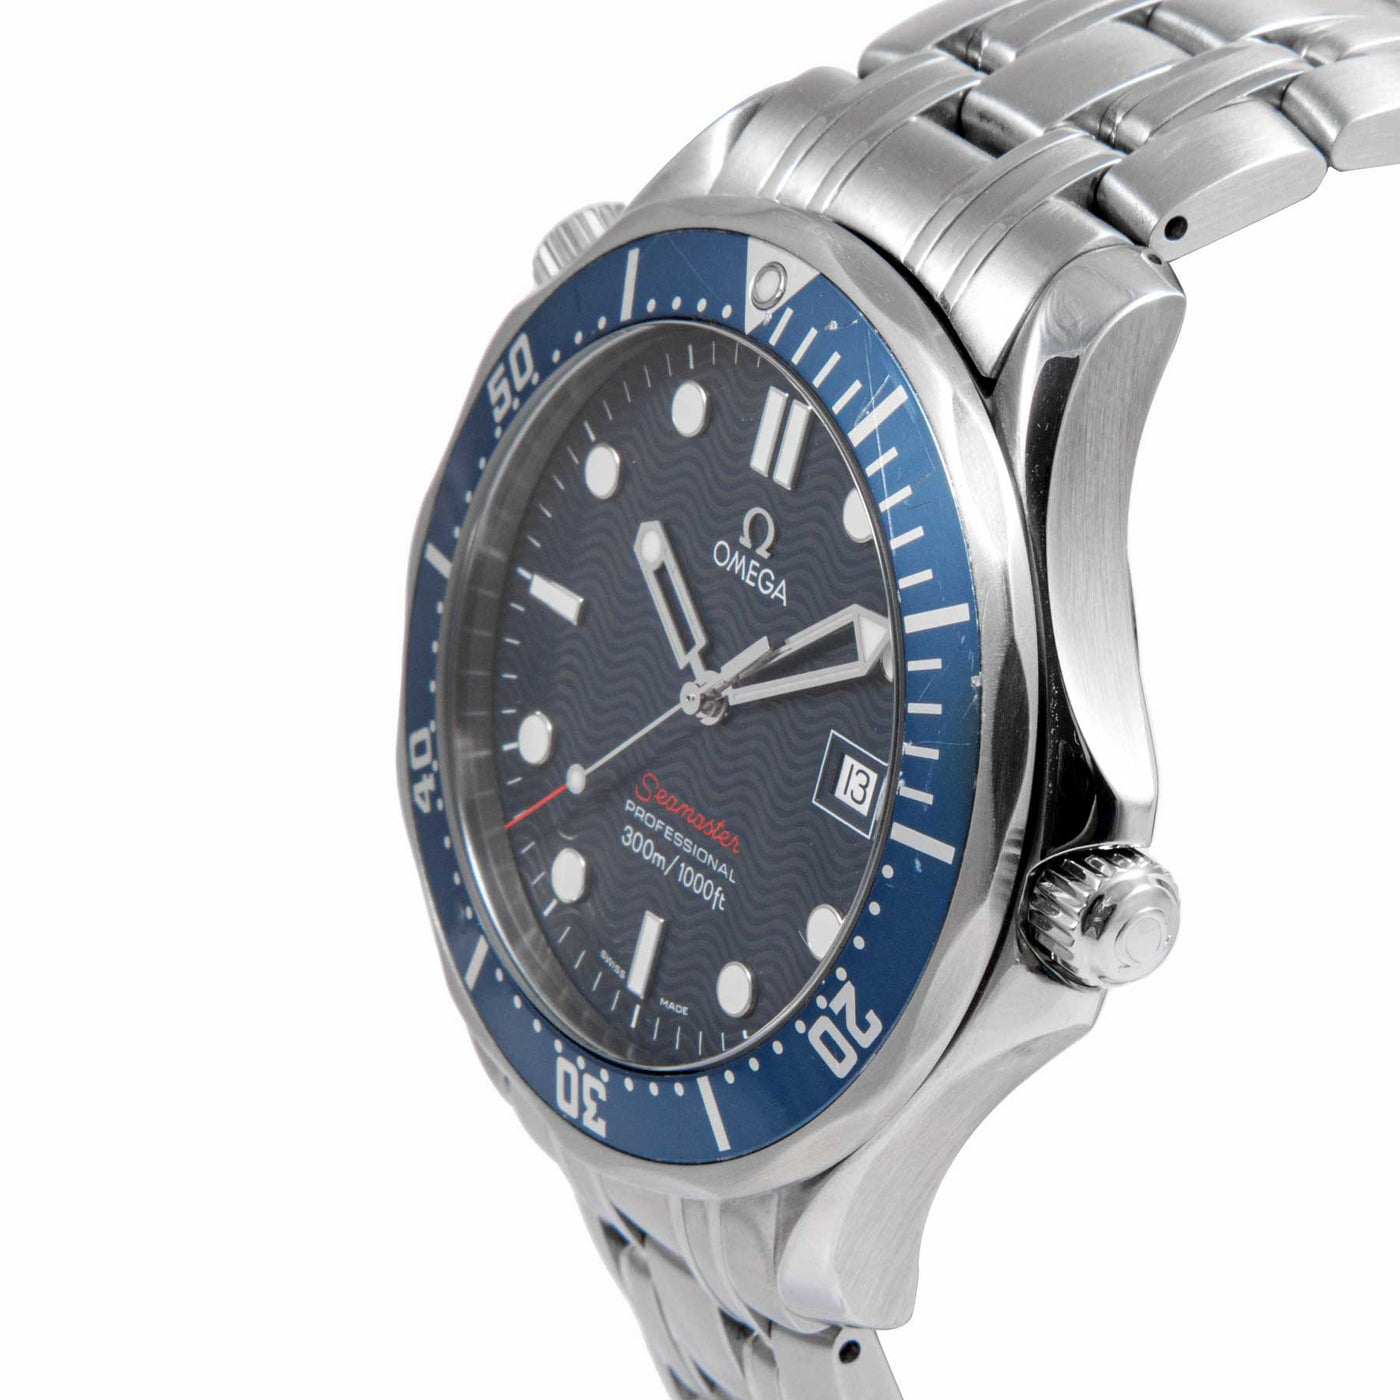 Seamaster Professional 300M-Timepiece360